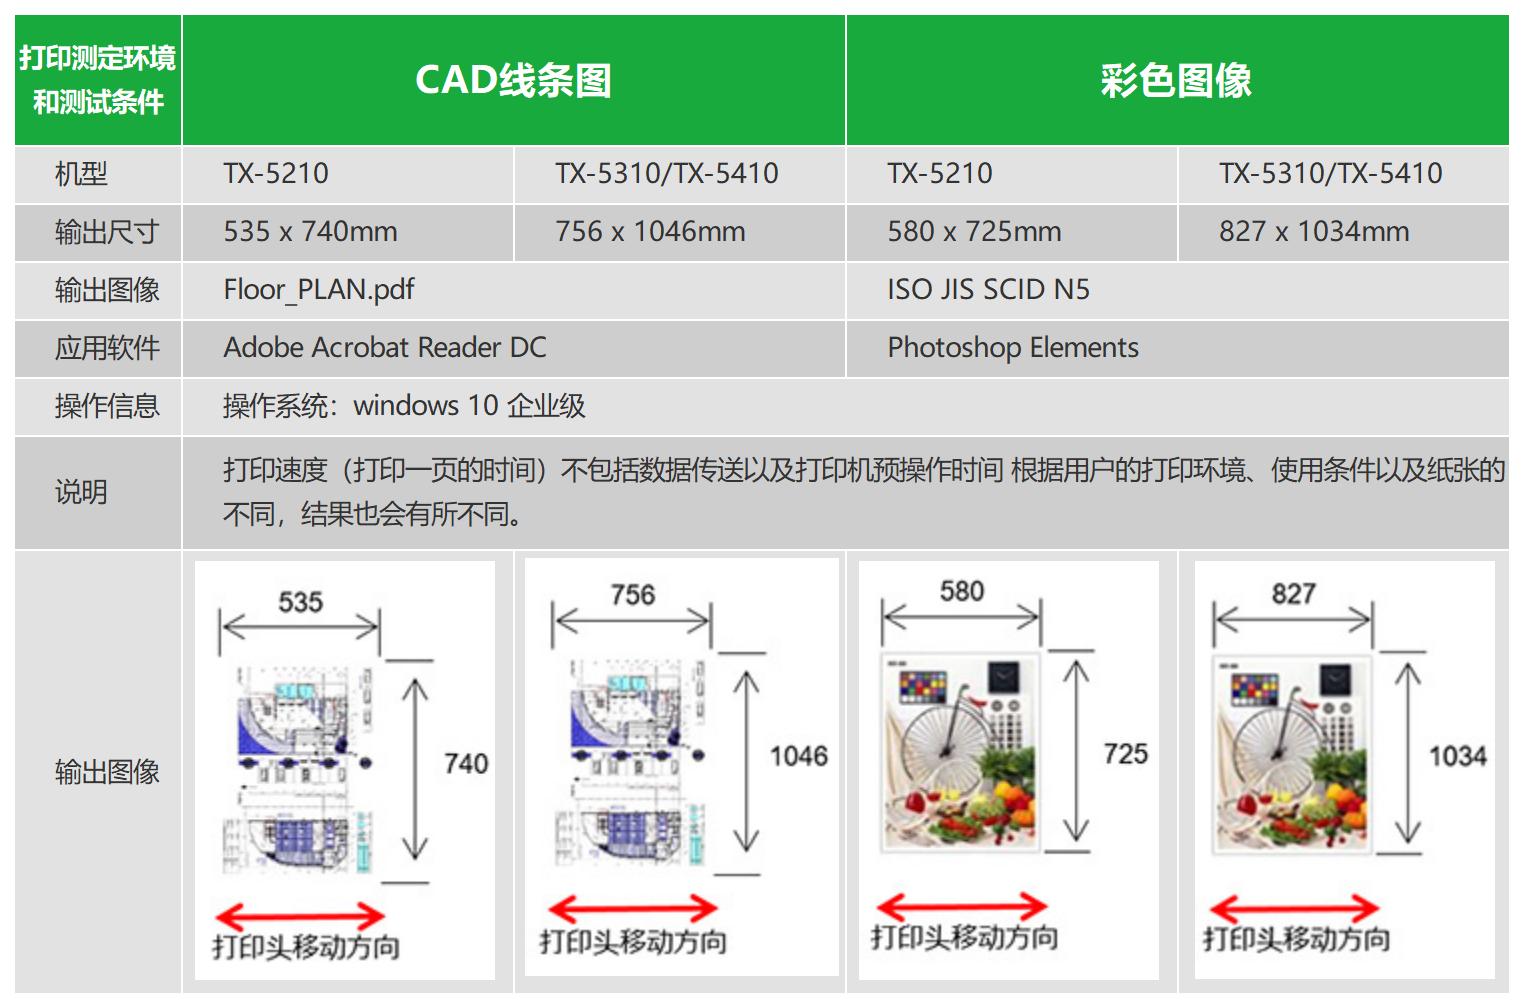 TX-5210 产品说明书_打印测试3.jpg